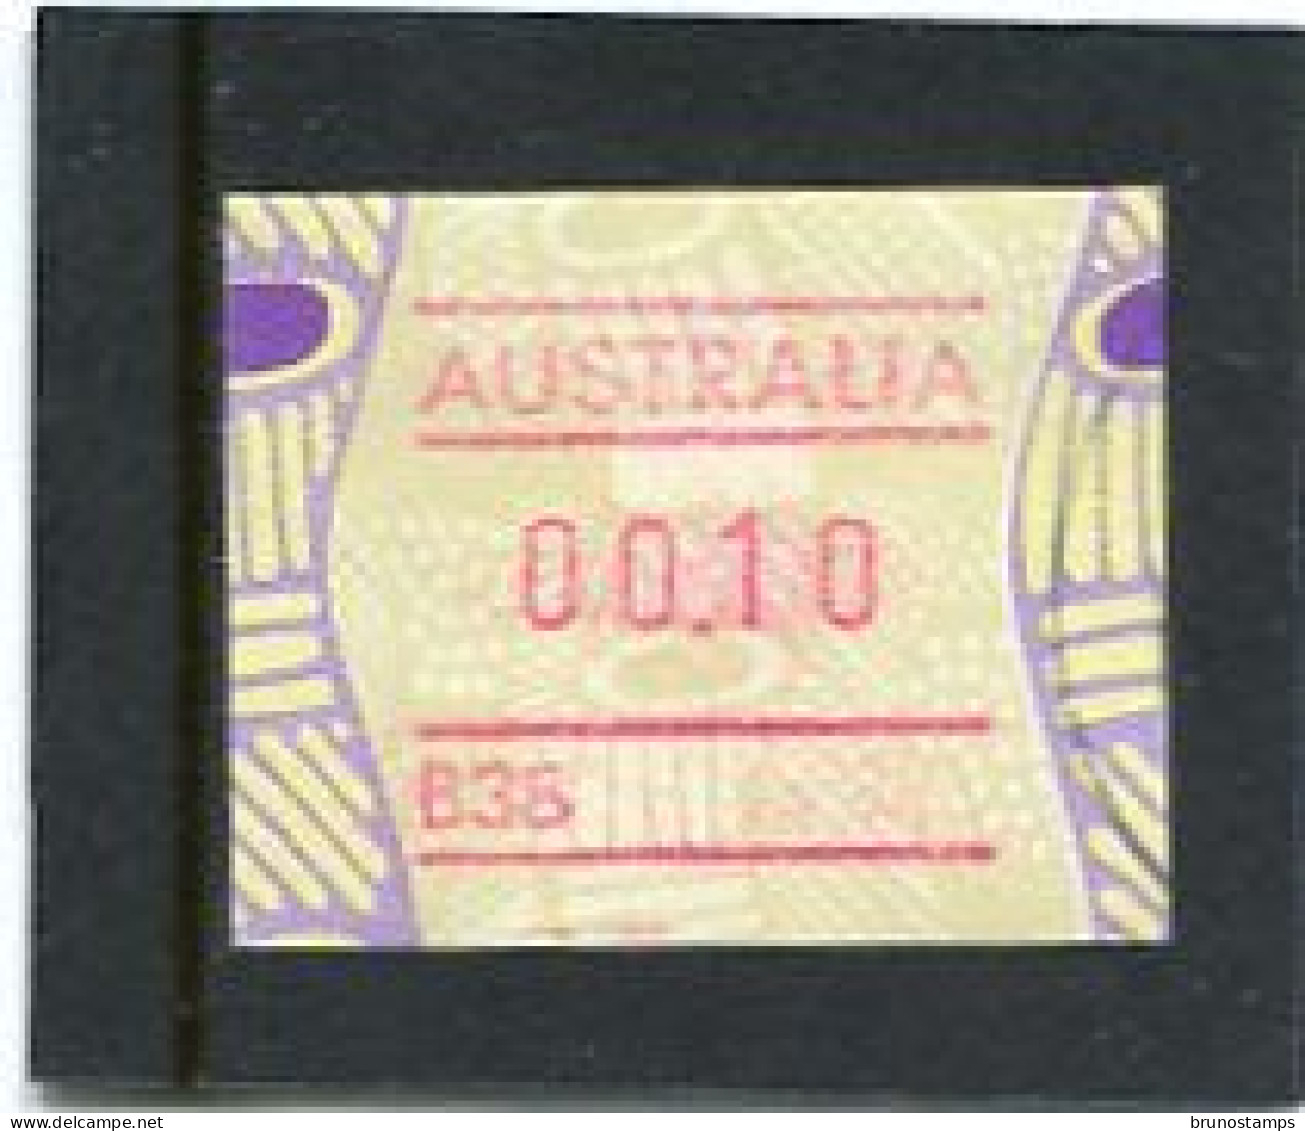 AUSTRALIA - 1999  10c  FRAMA  TIWI  NO  POSTCODE   B38   FINE USED - Machine Labels [ATM]